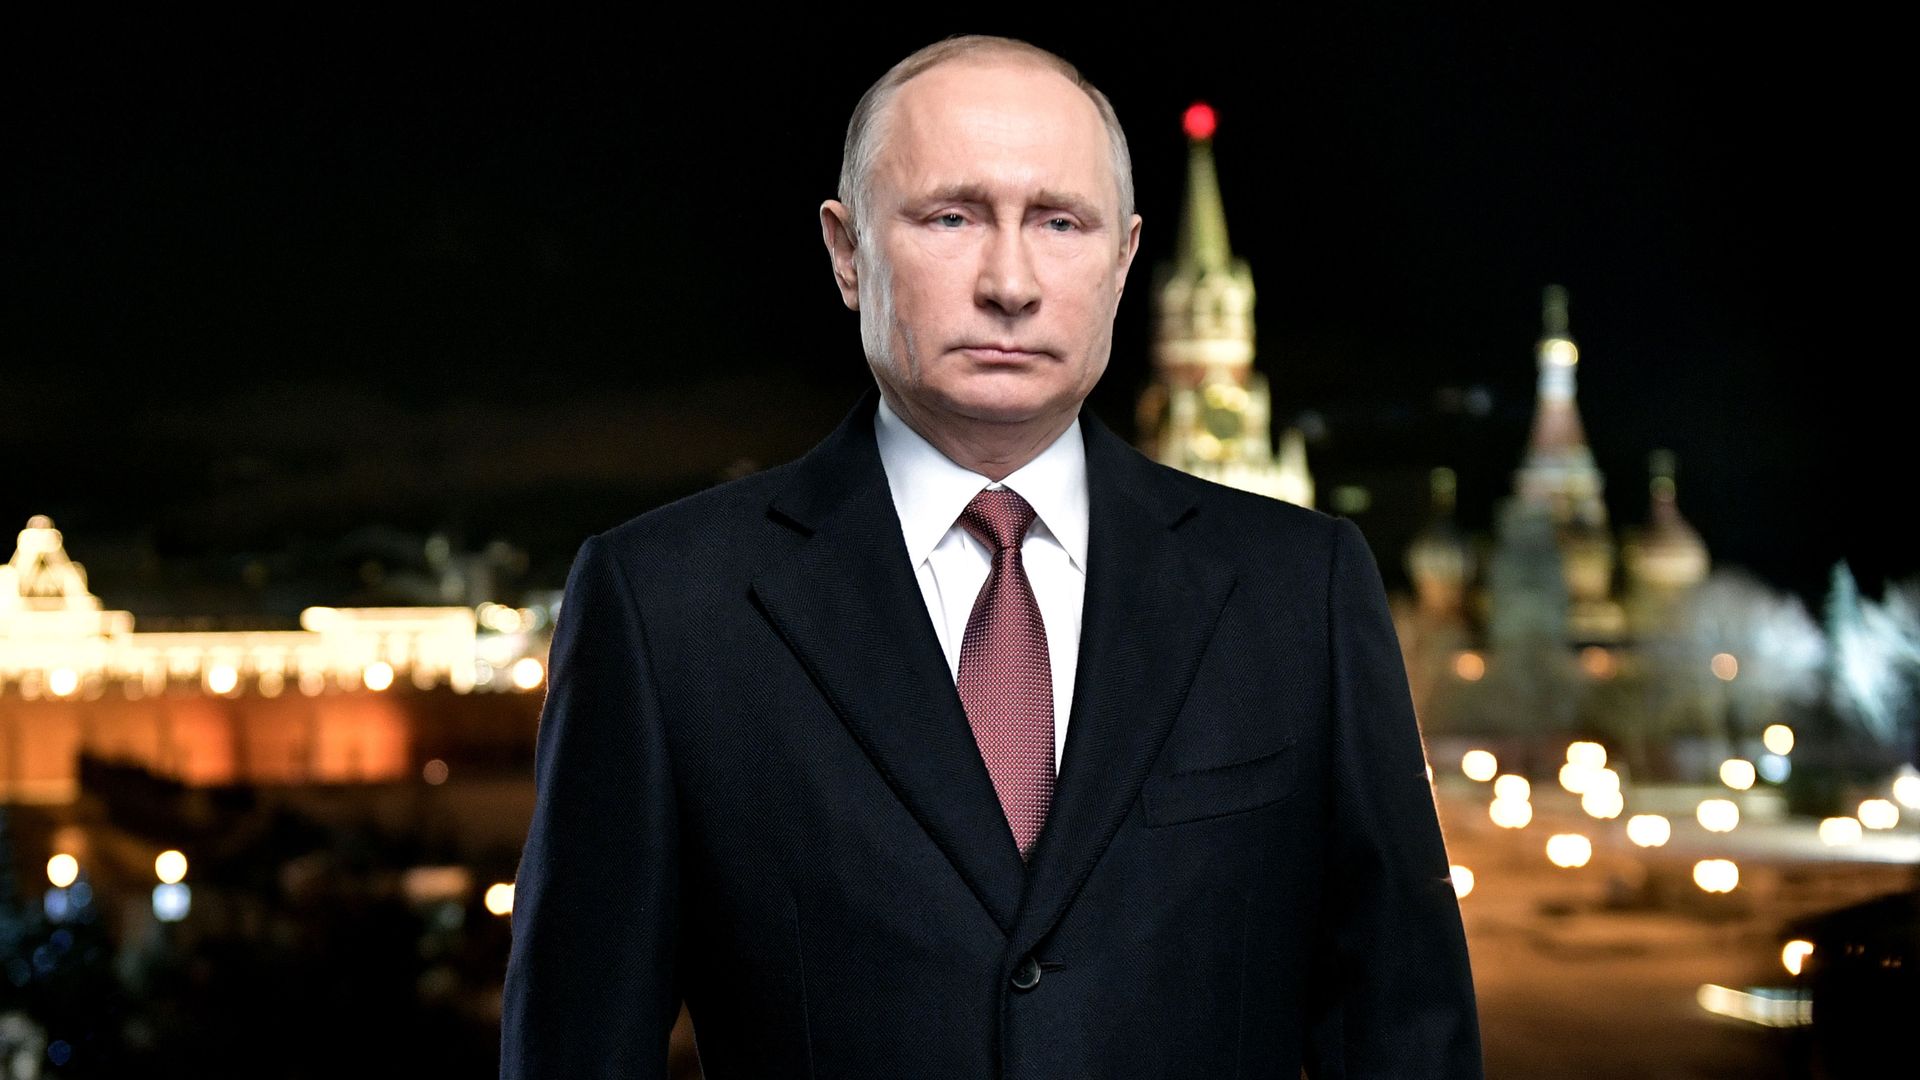 Vladimir Putin looking slightly unhappy